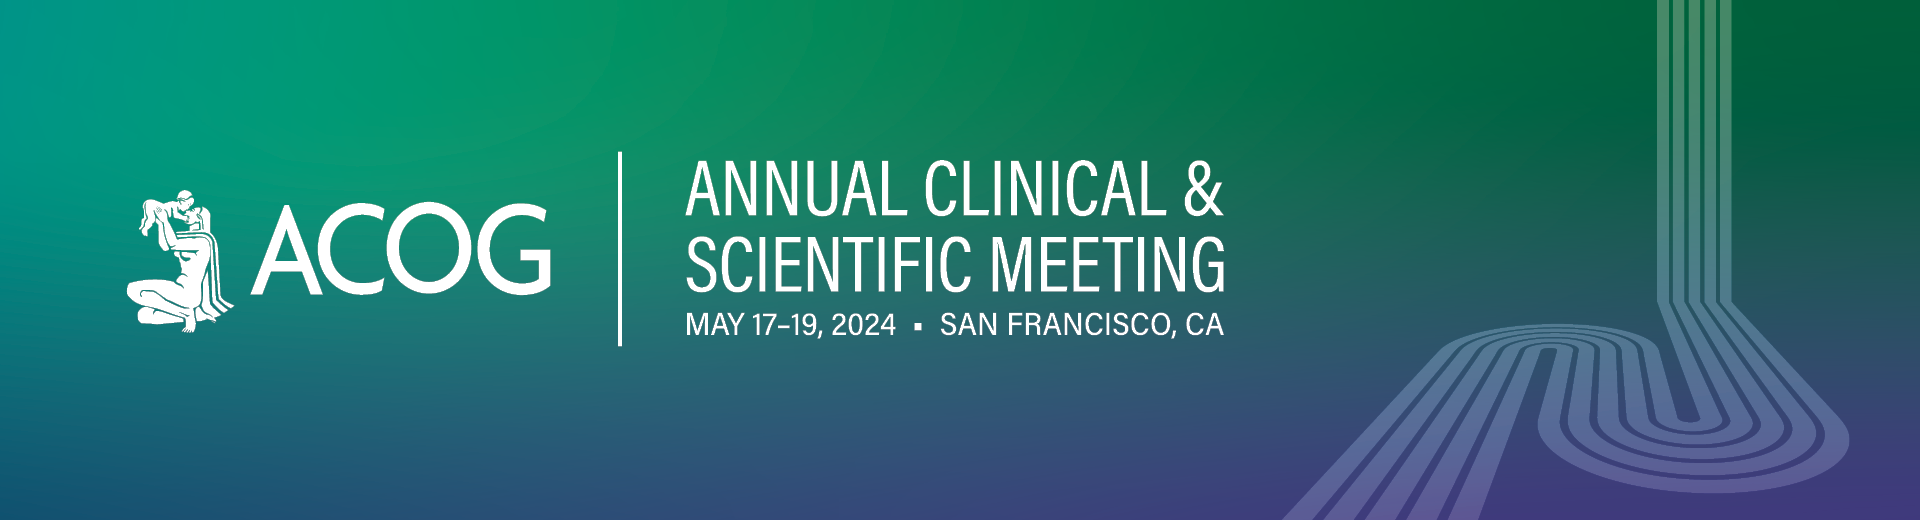 ACOG 2024 Annual Clinical & Scientific Meeting